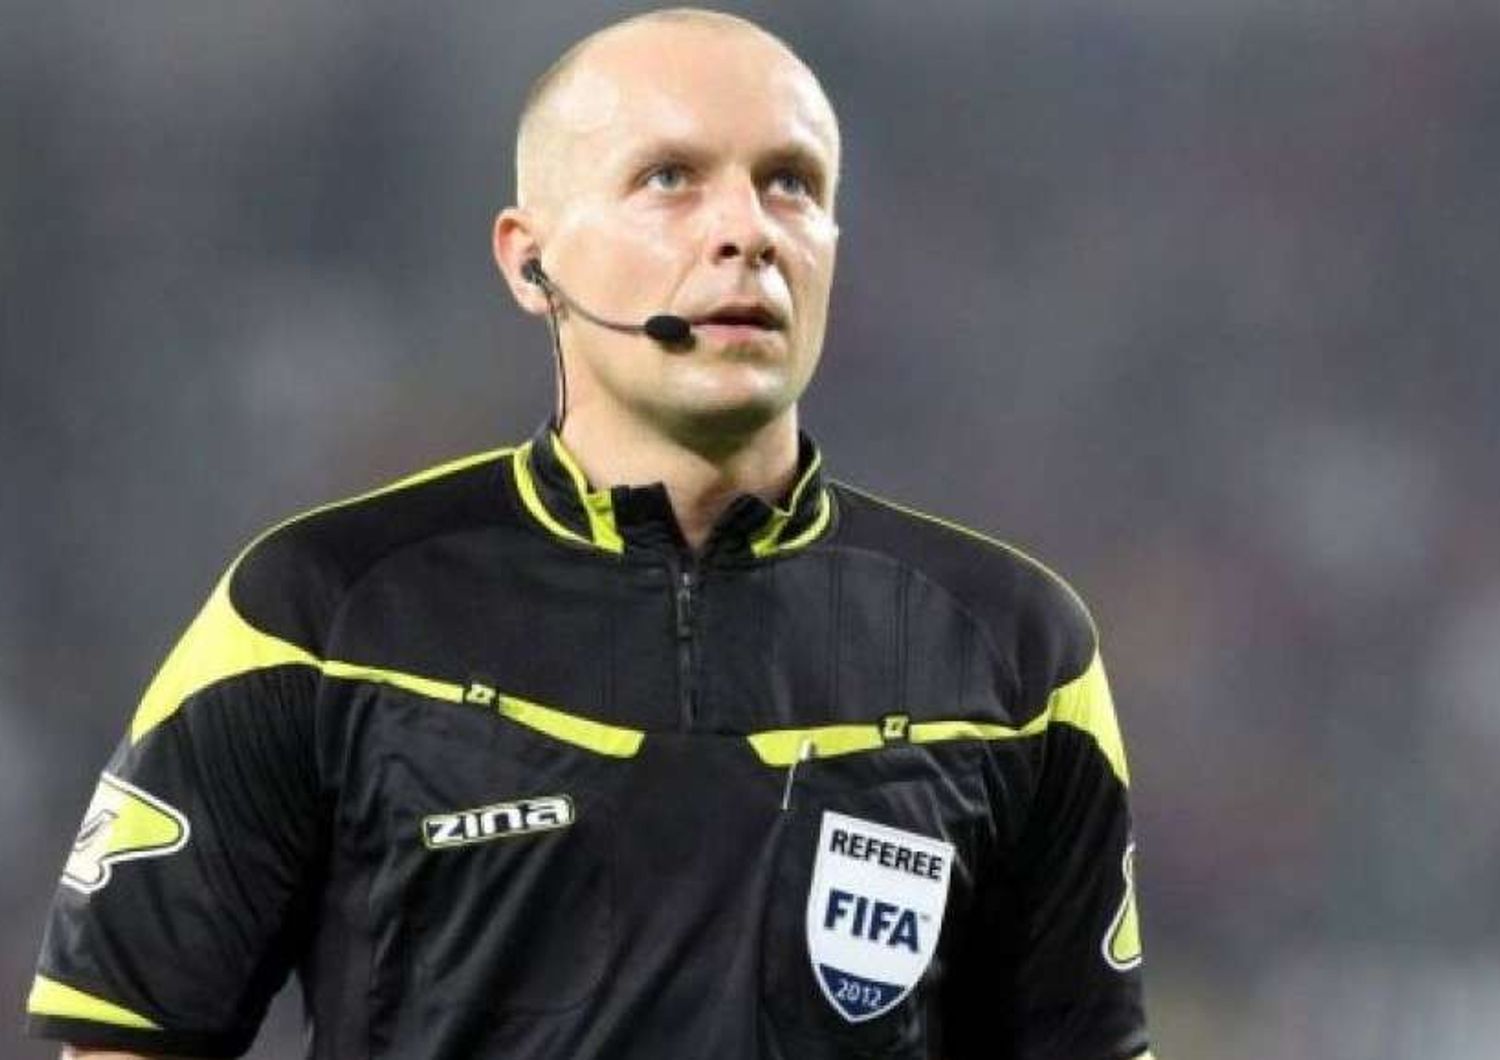 Football: Poland's Marciniak to referee Juventus-Malmo